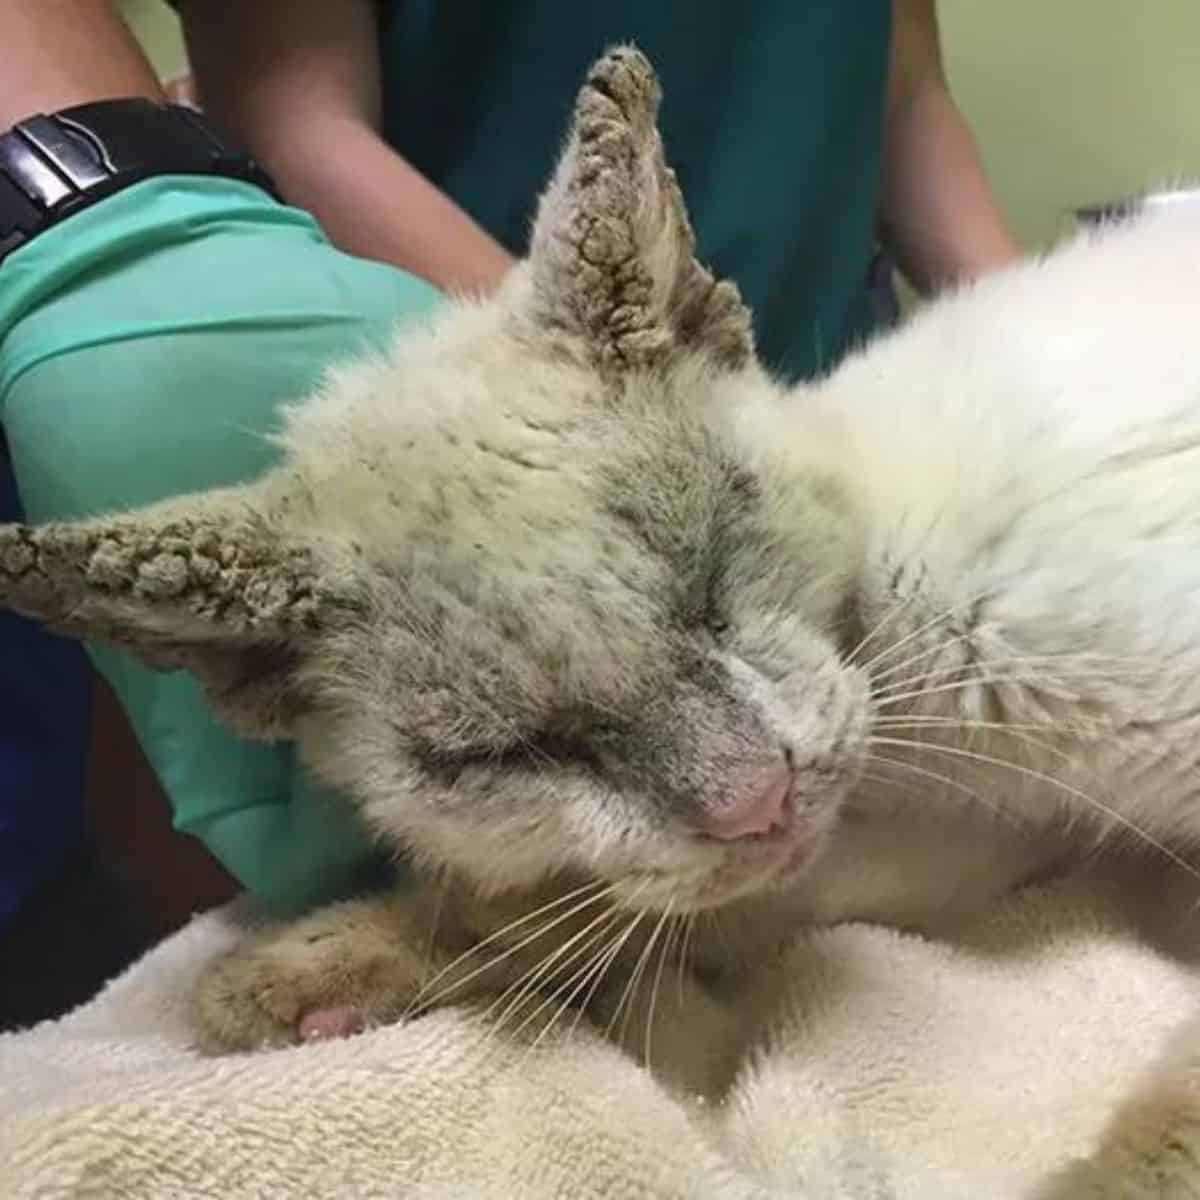 rescue cat at the veterinarian's examination